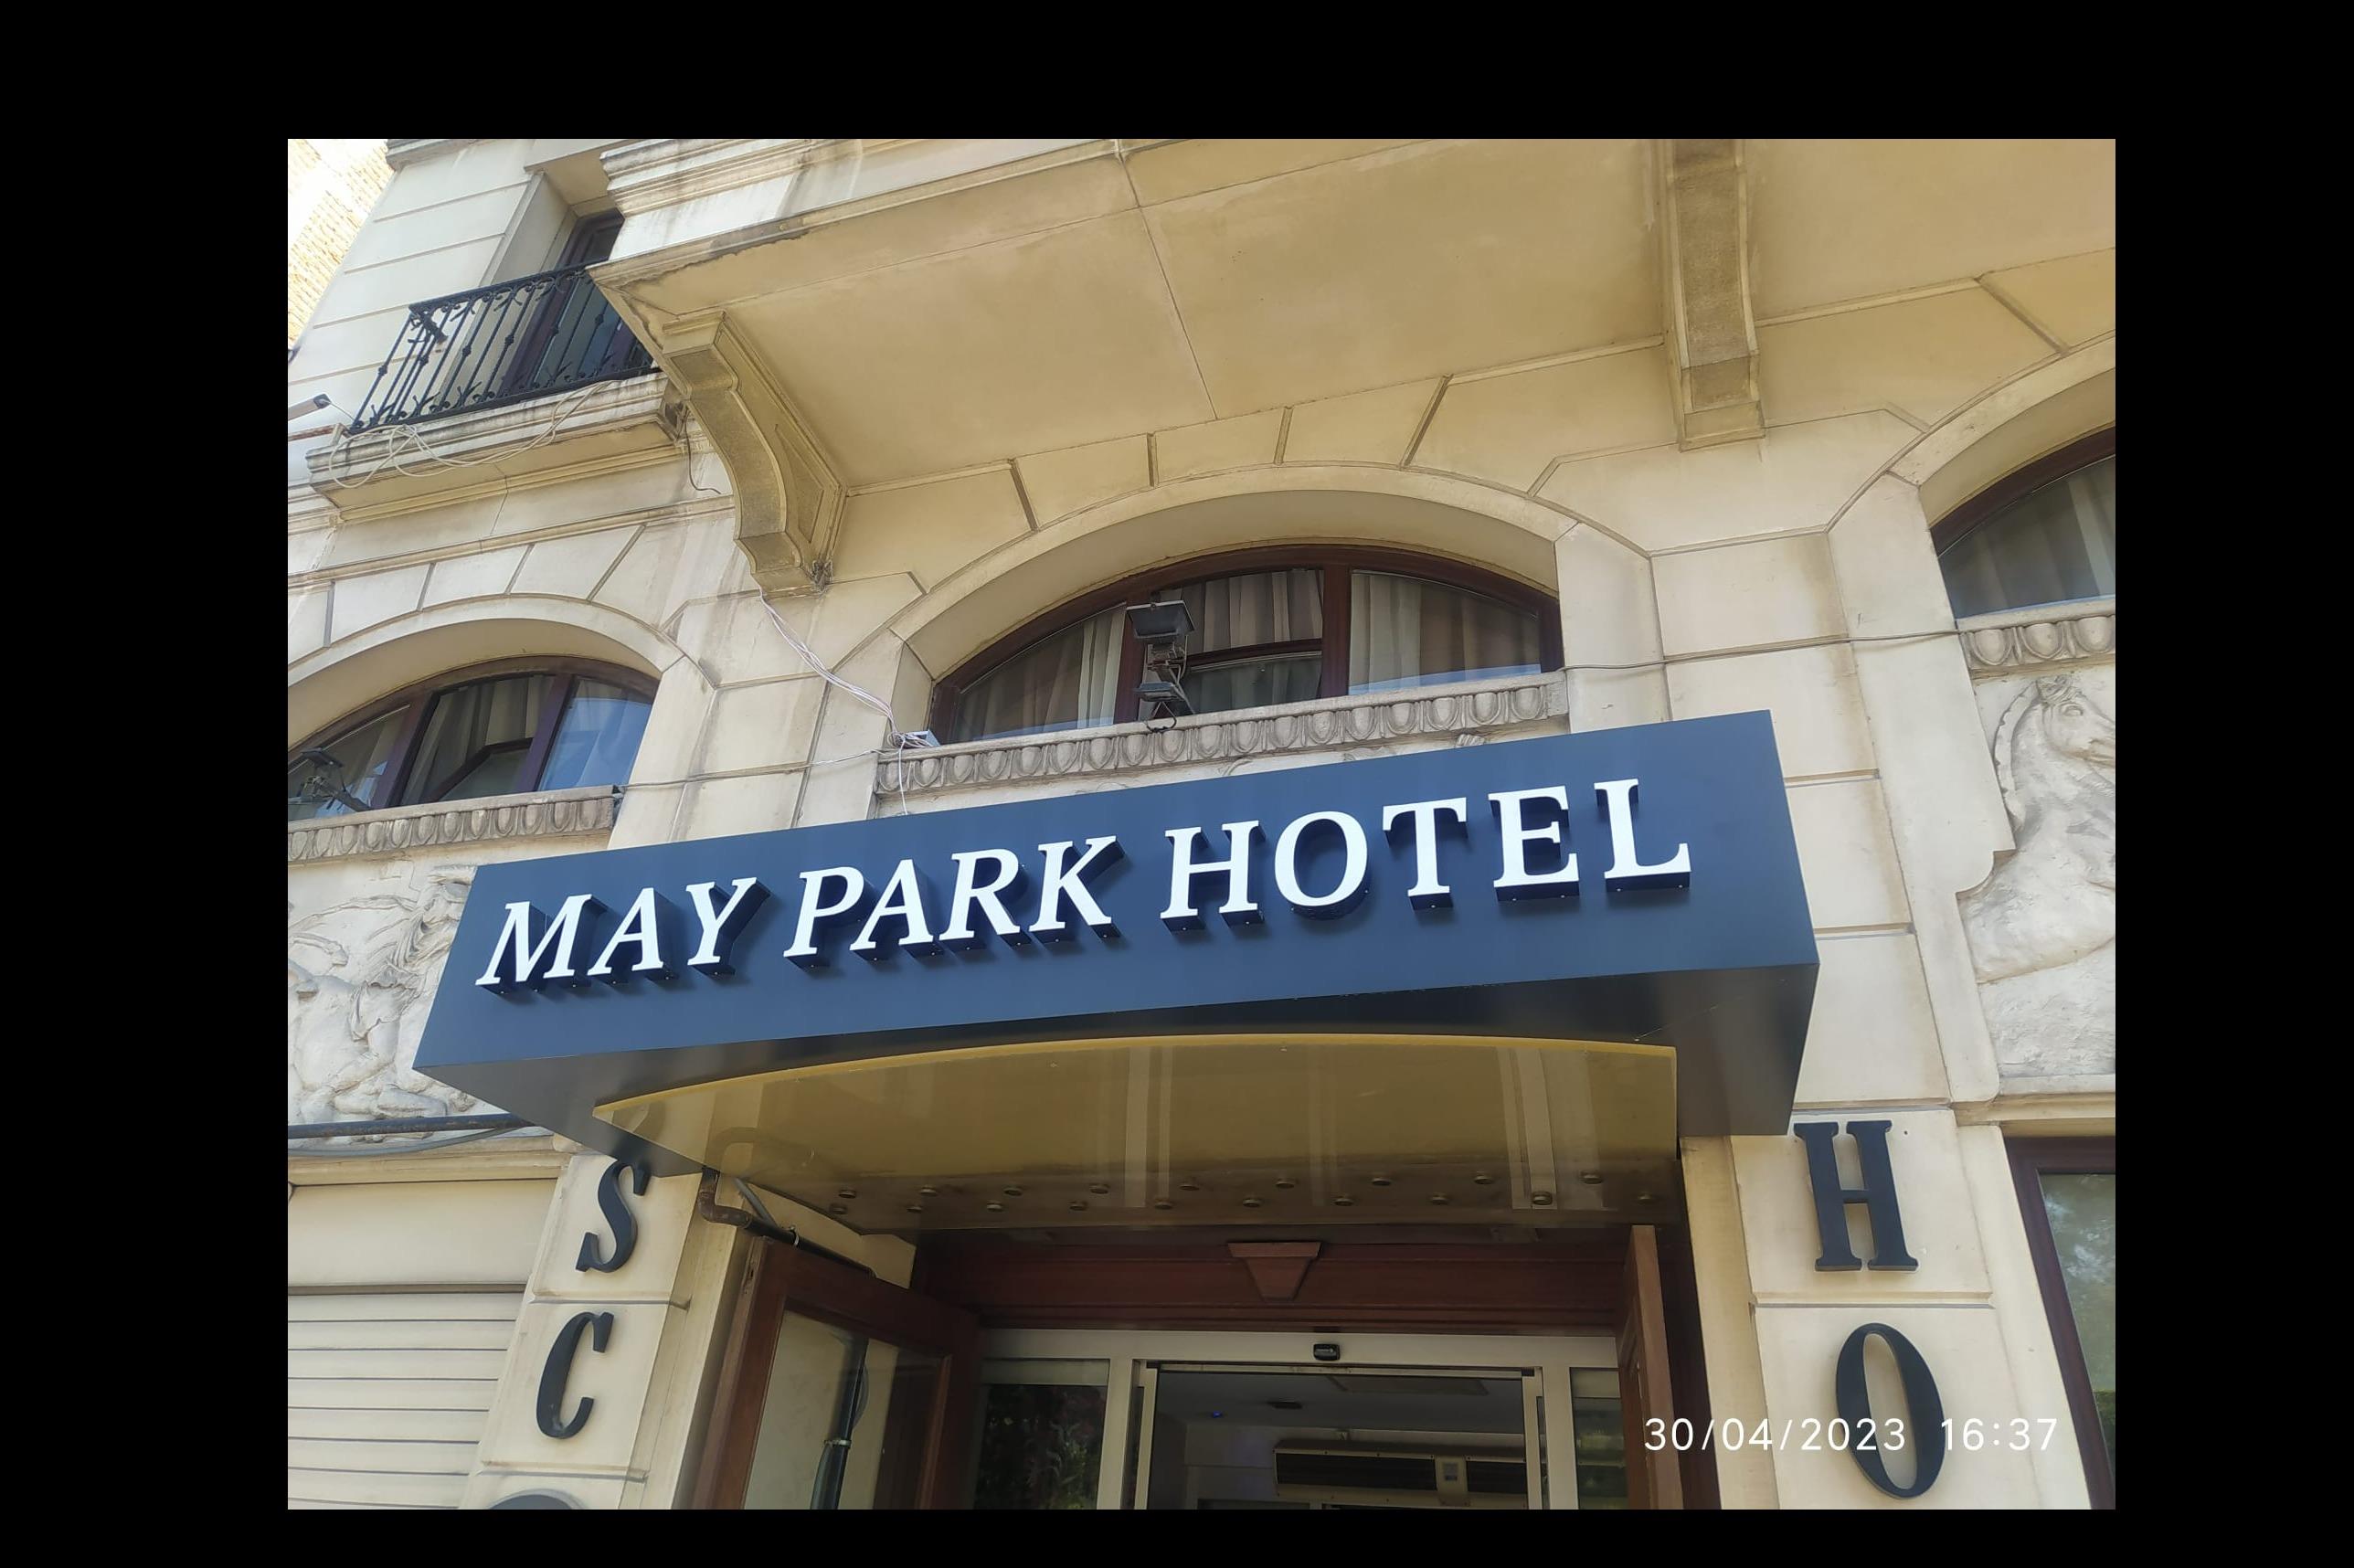 May Park Hotel